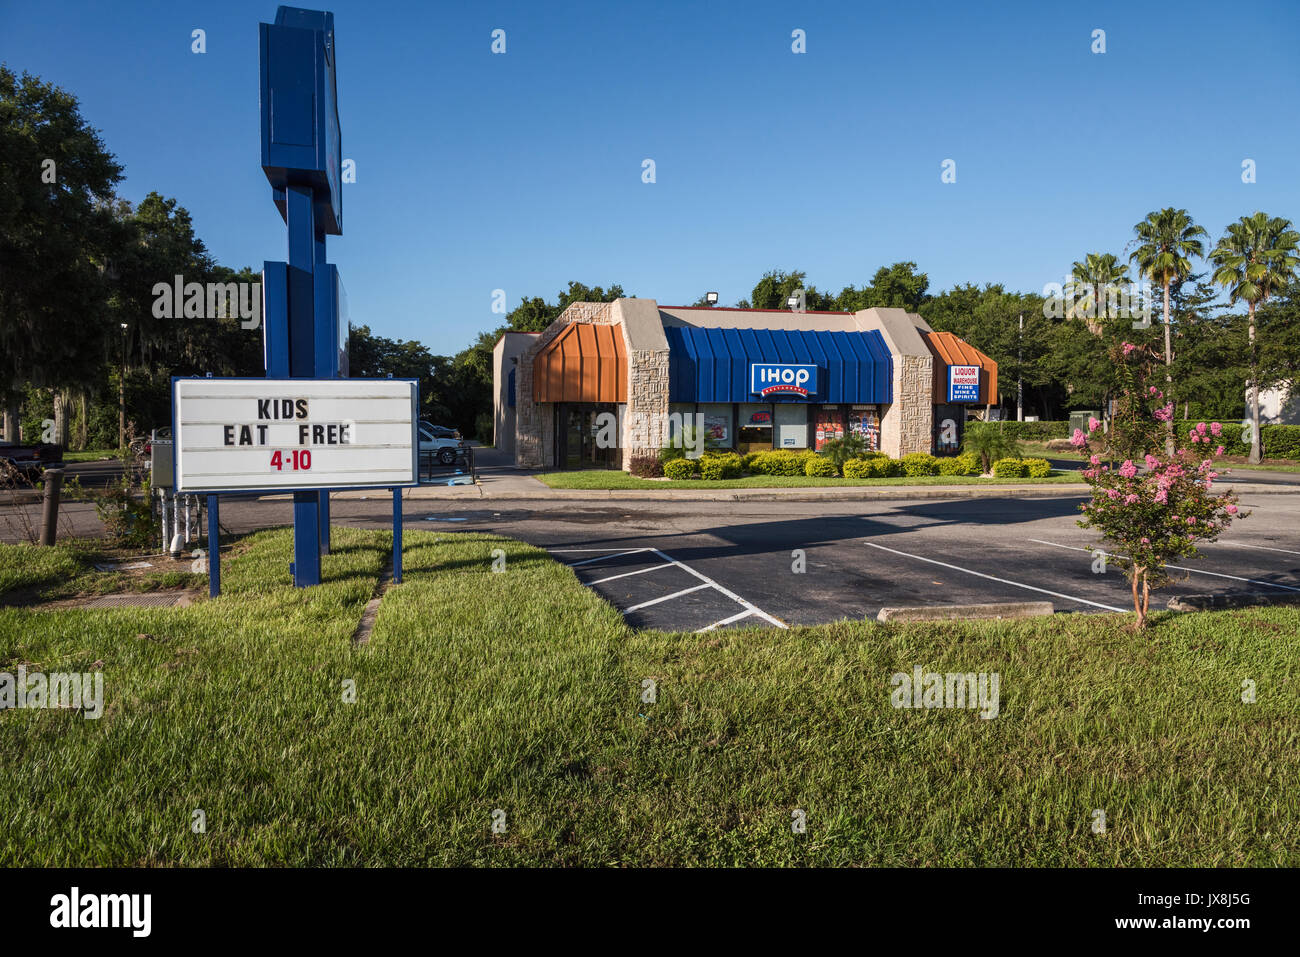 IHOP Restaurant located in Leesburg, Florida USA Stock Photo